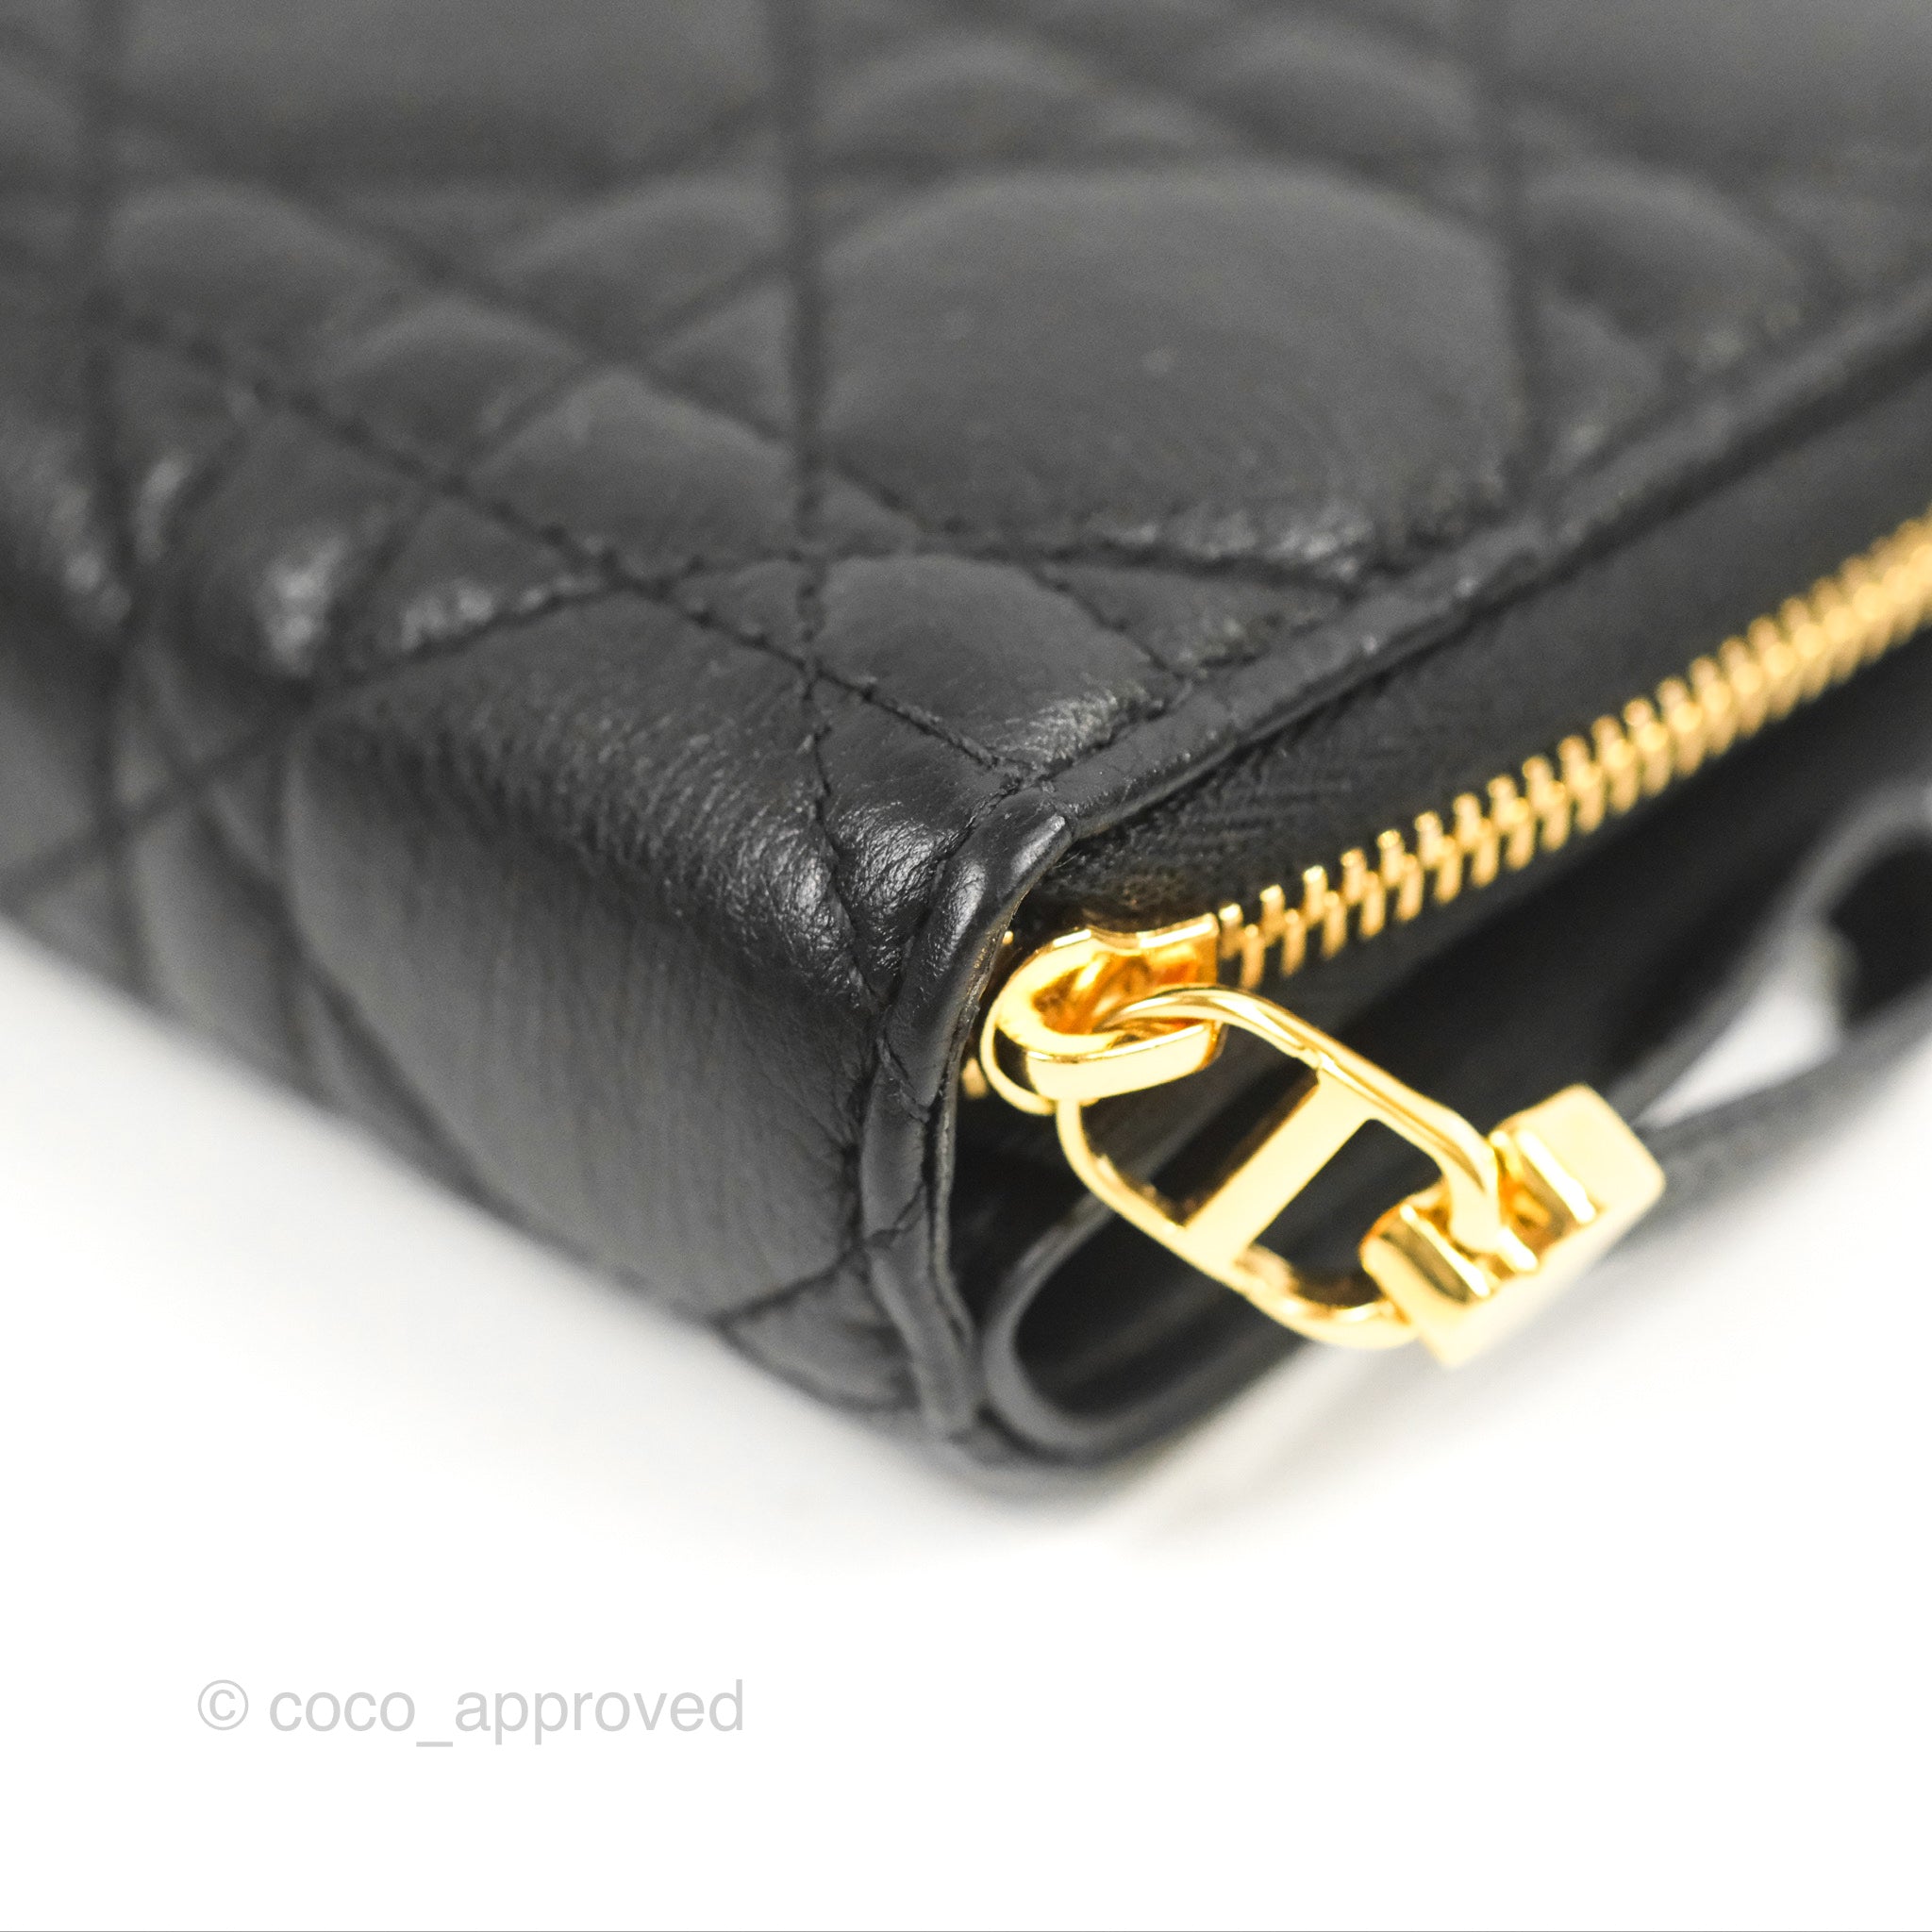 Dior - Dior Caro Zipped Key Case Black Supple Cannage Calfskin - Women